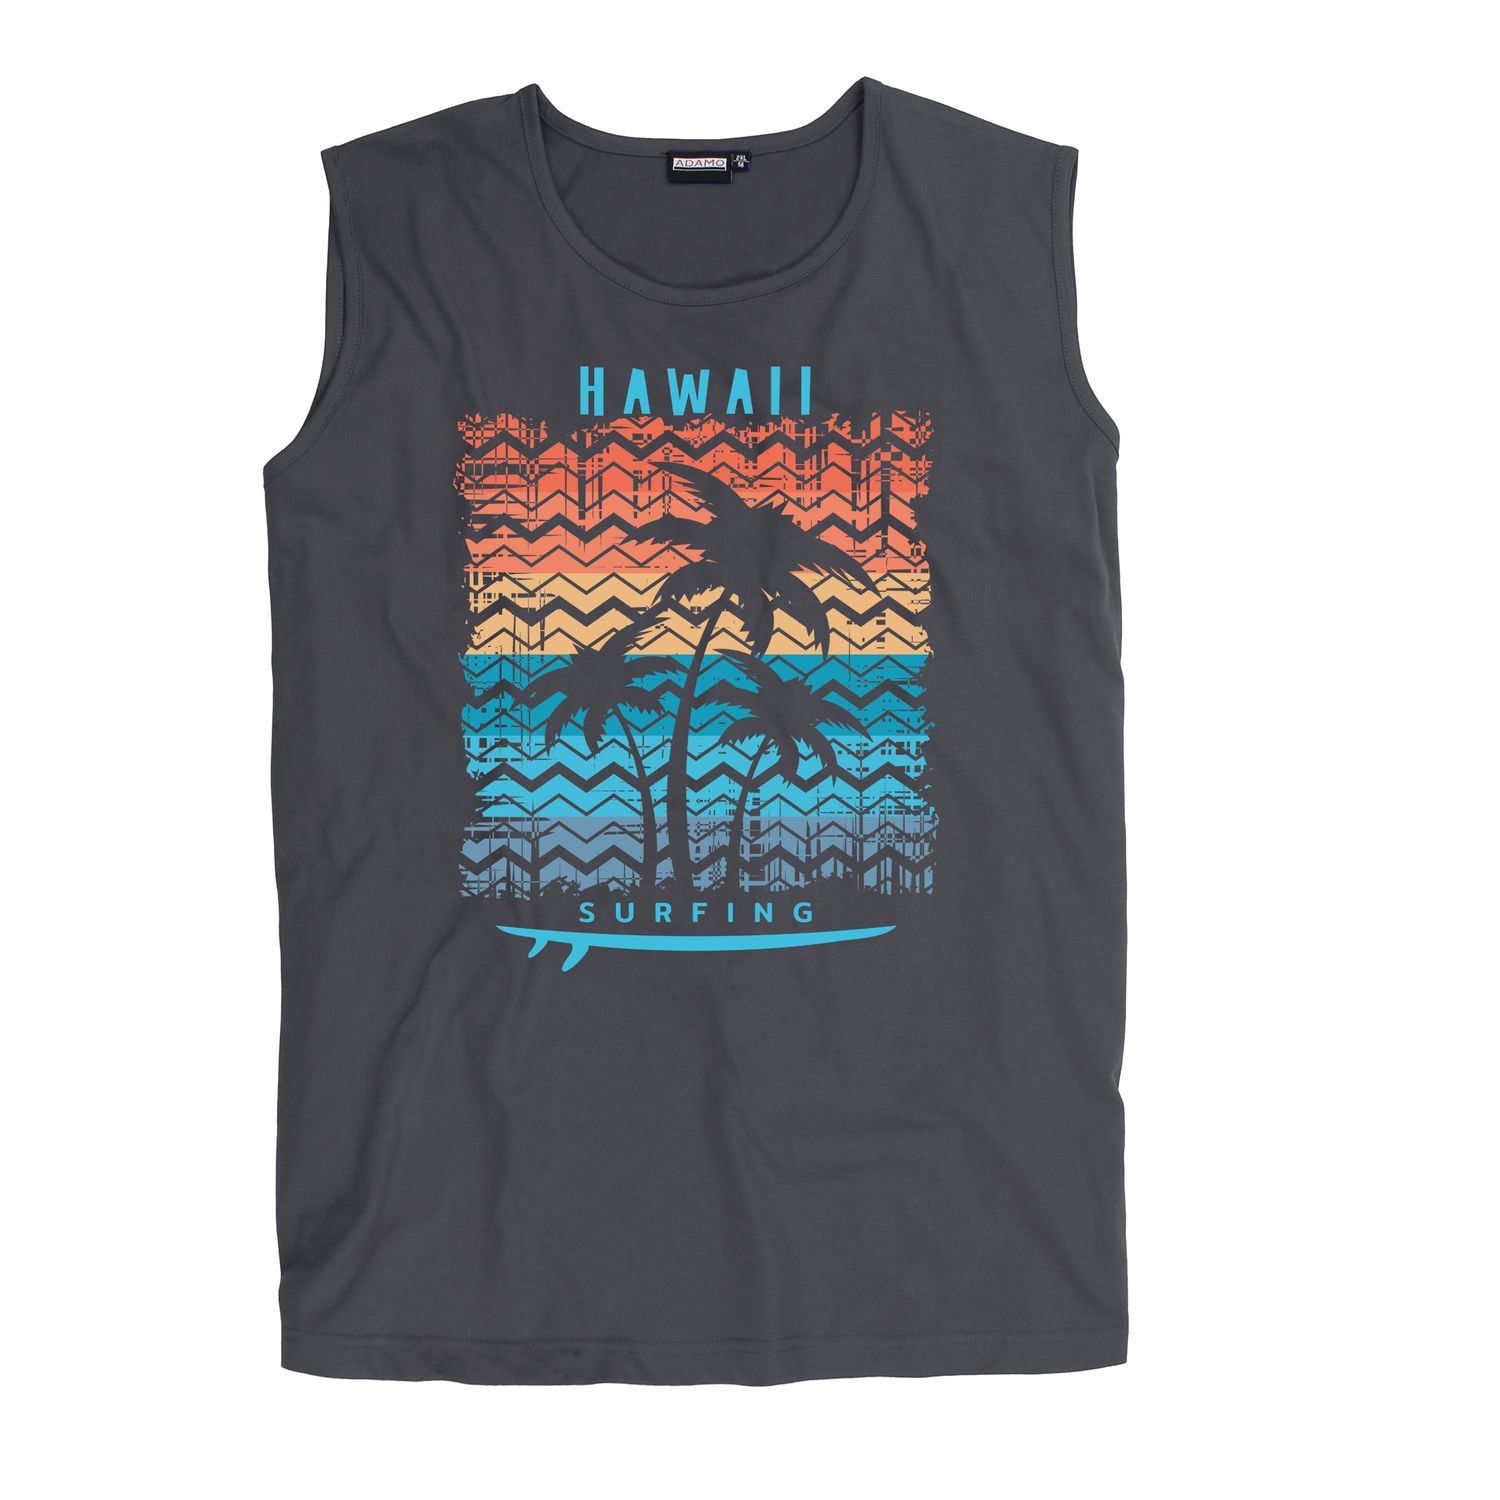 Muskelshirt bedruckt "Hawaii" von ADAMO in den Größen 2XL-12XL